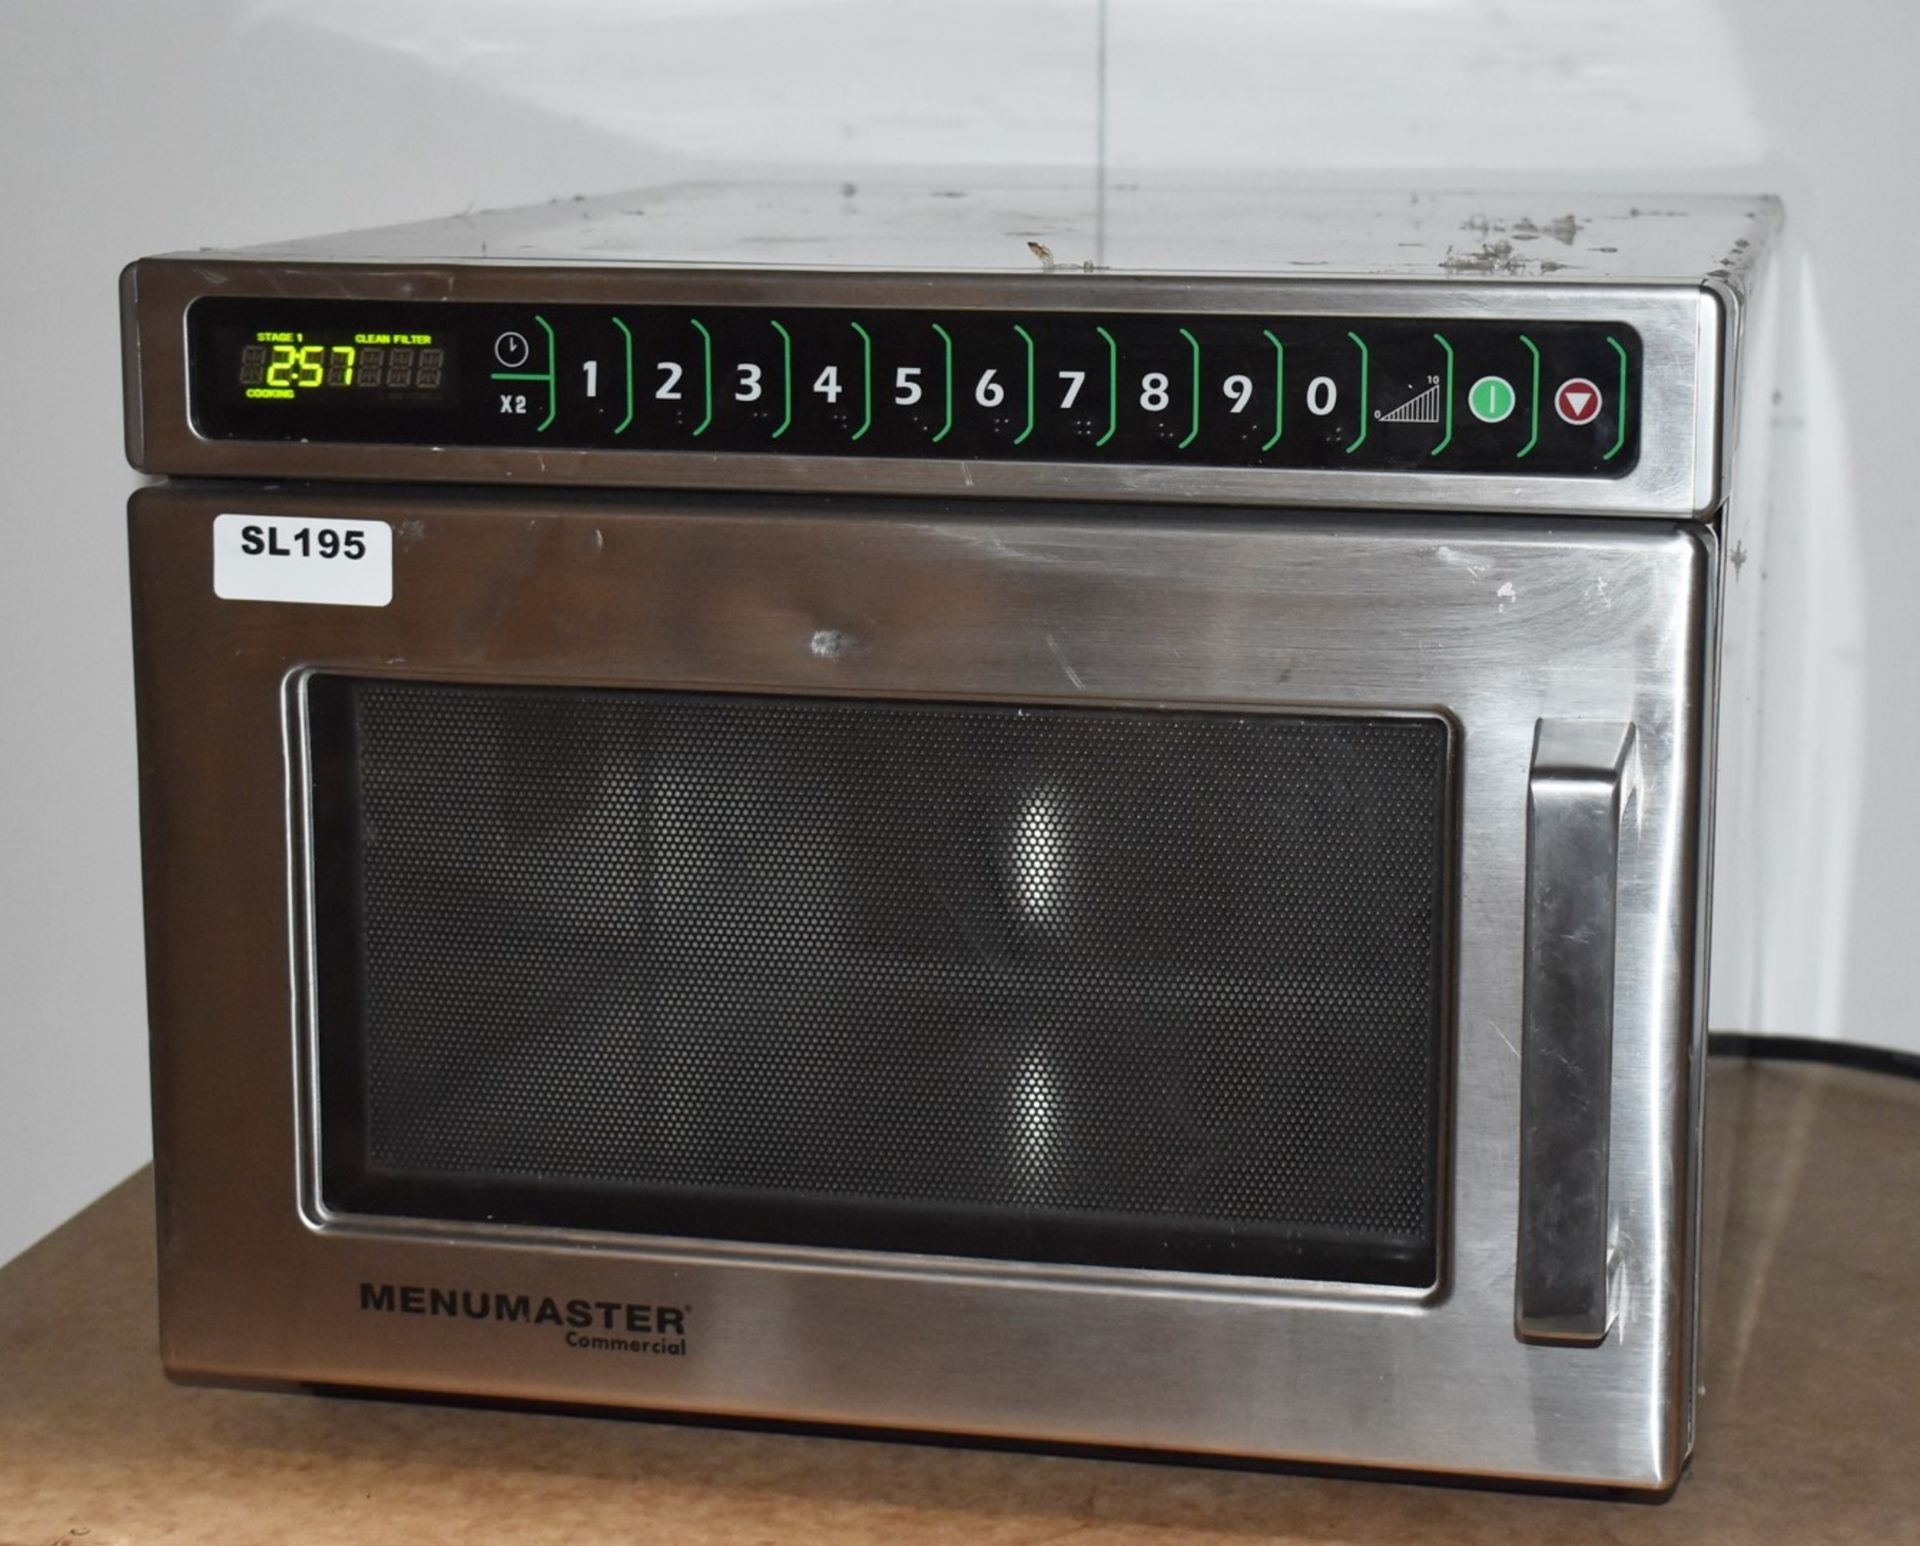 1 x Menumaster Commercial Microwave Oven - Model DEC14E2U - 1.4kW, 13A, 17Ltr - 2018 Model - - Image 10 of 12